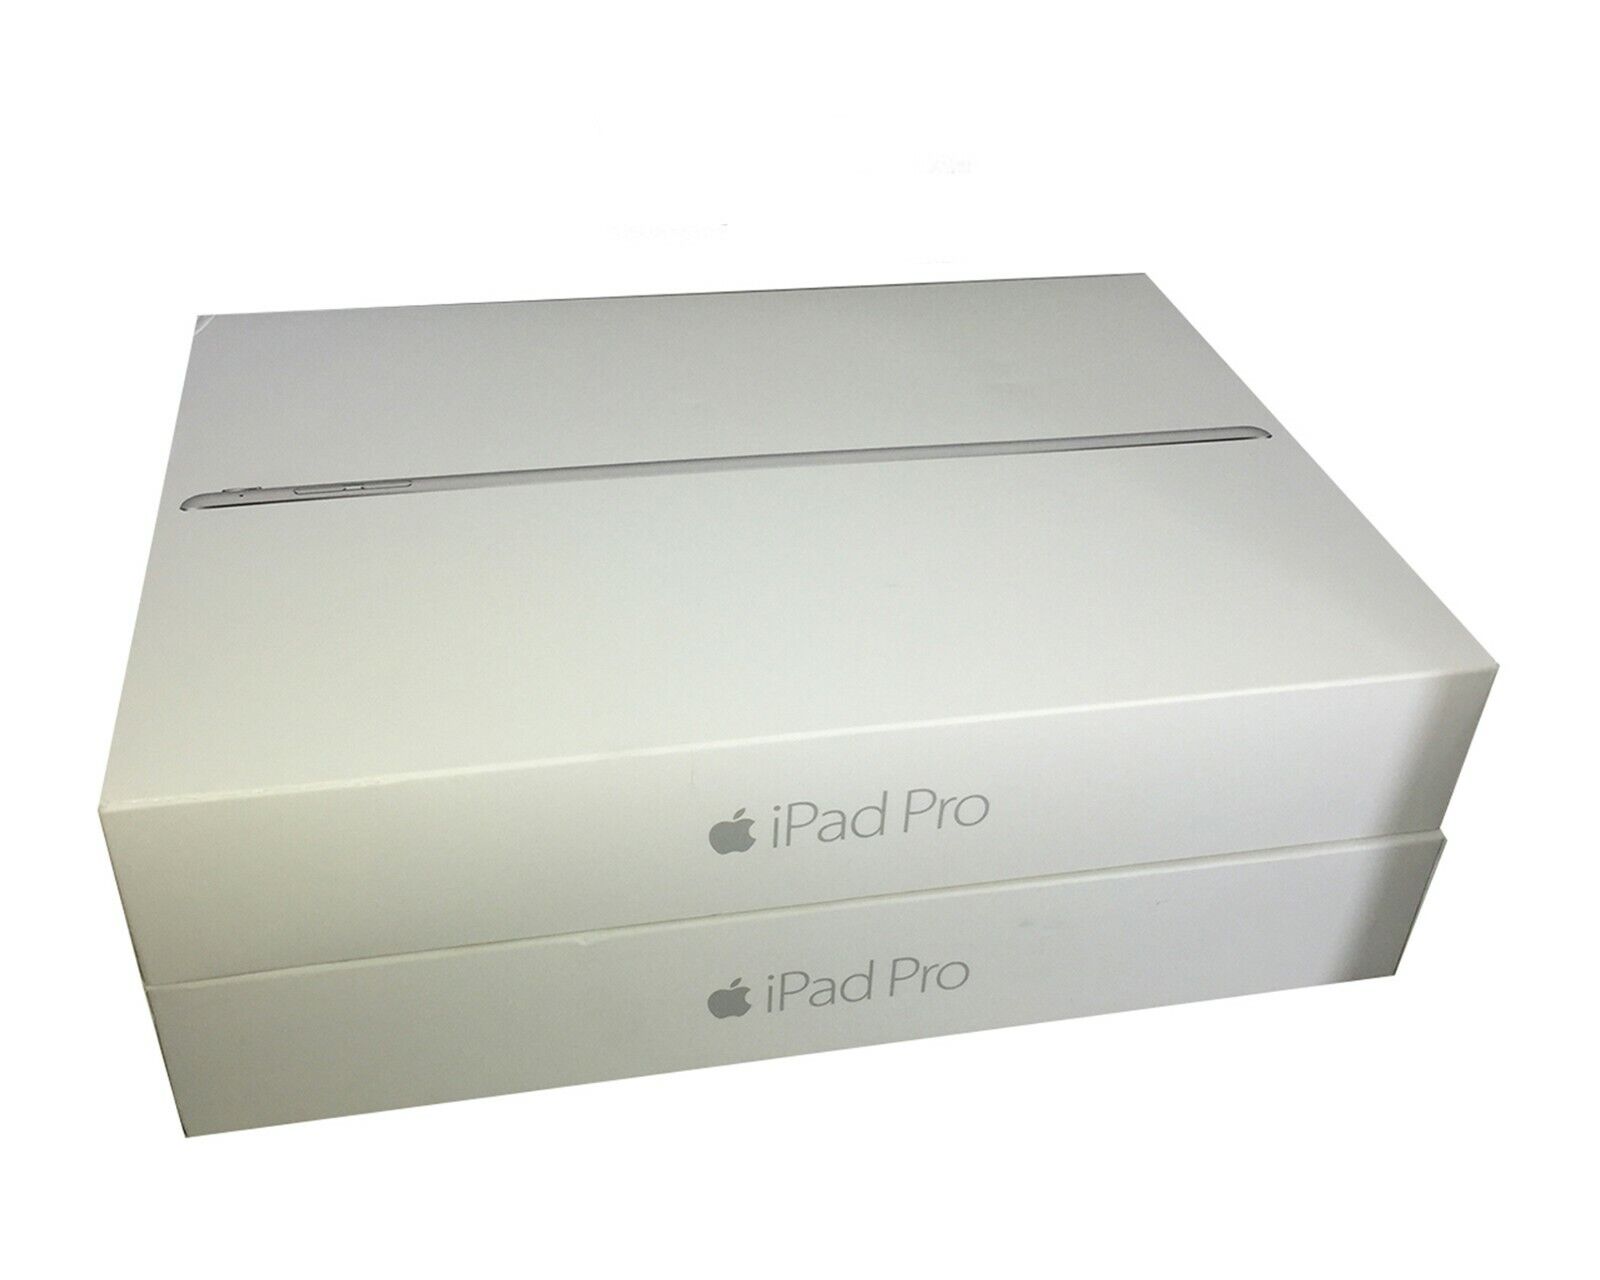 Apple iPad Pro, 128GB, Space Gray, Wi-Fi Only, 9.7-inch, Original Box, Bundle